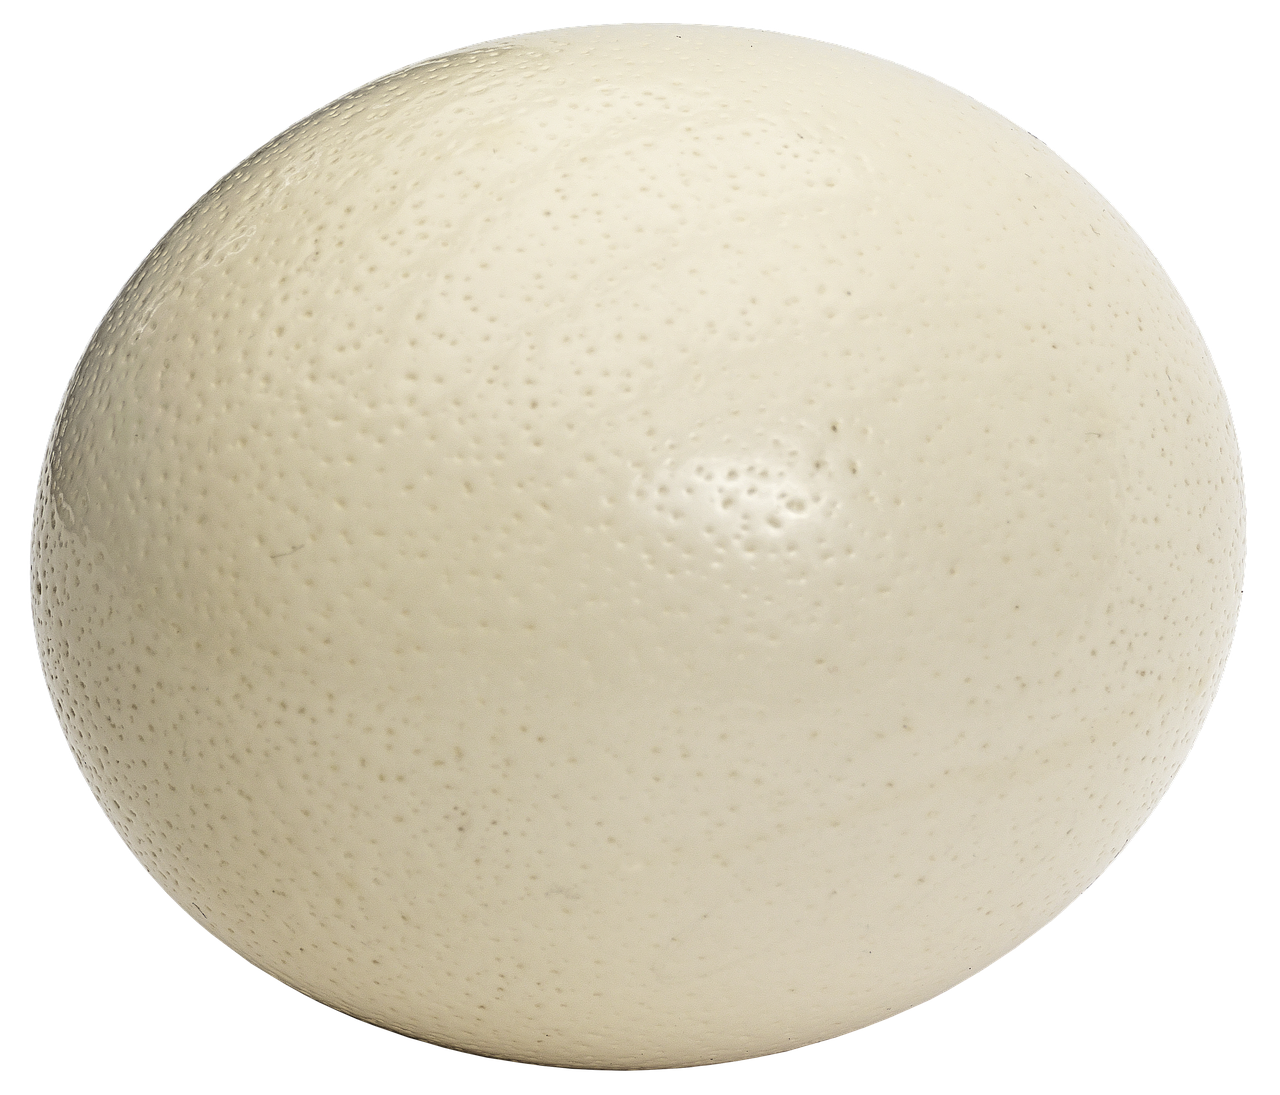 ostrich egg egg large egg free photo